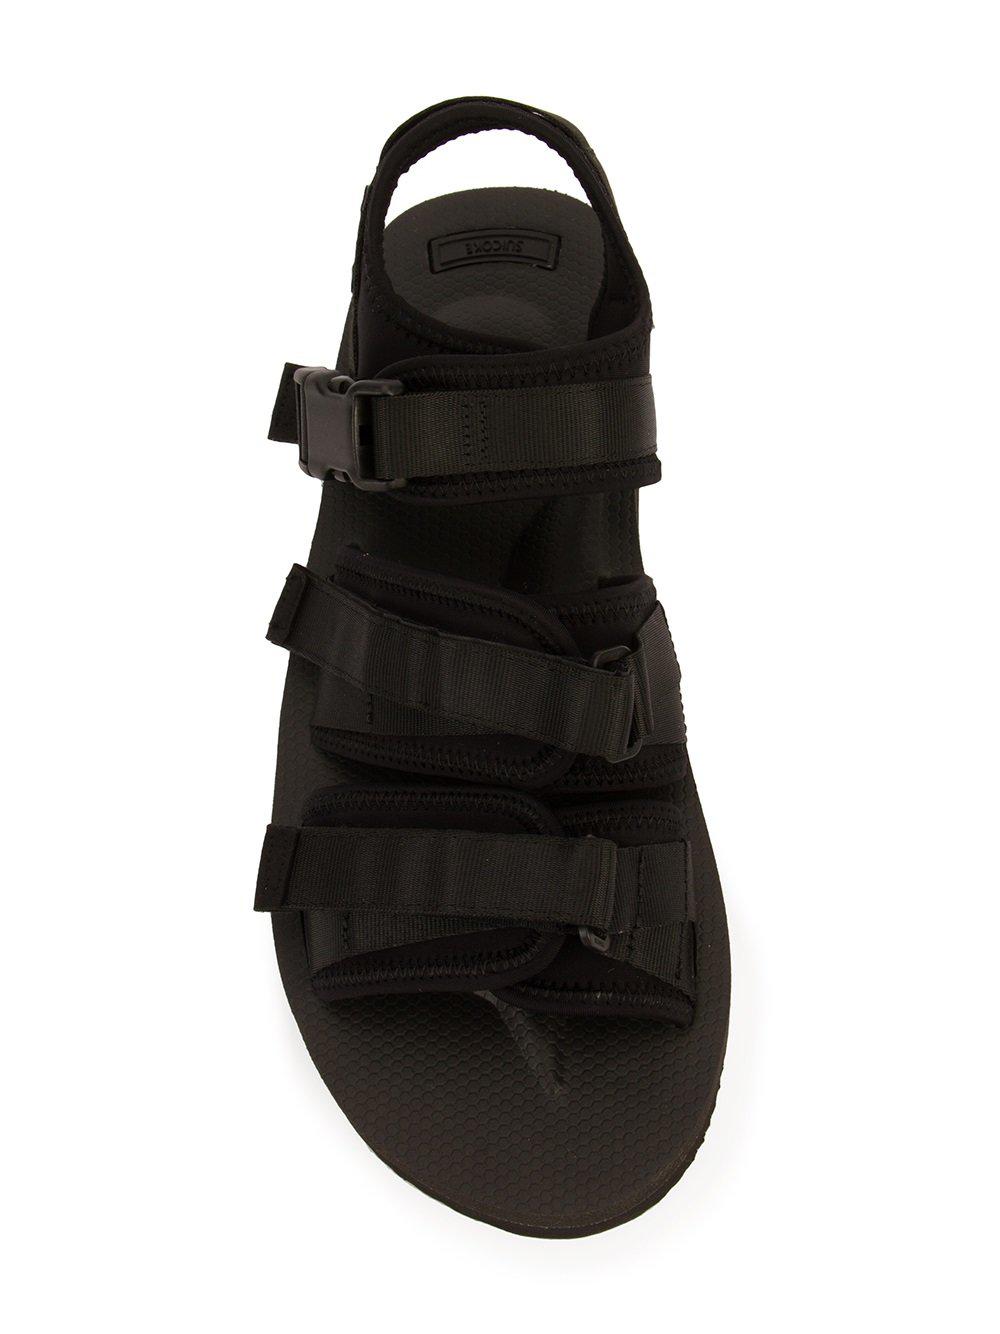 Lyst - Suicoke Velcro Straps Sandals in Black for Men